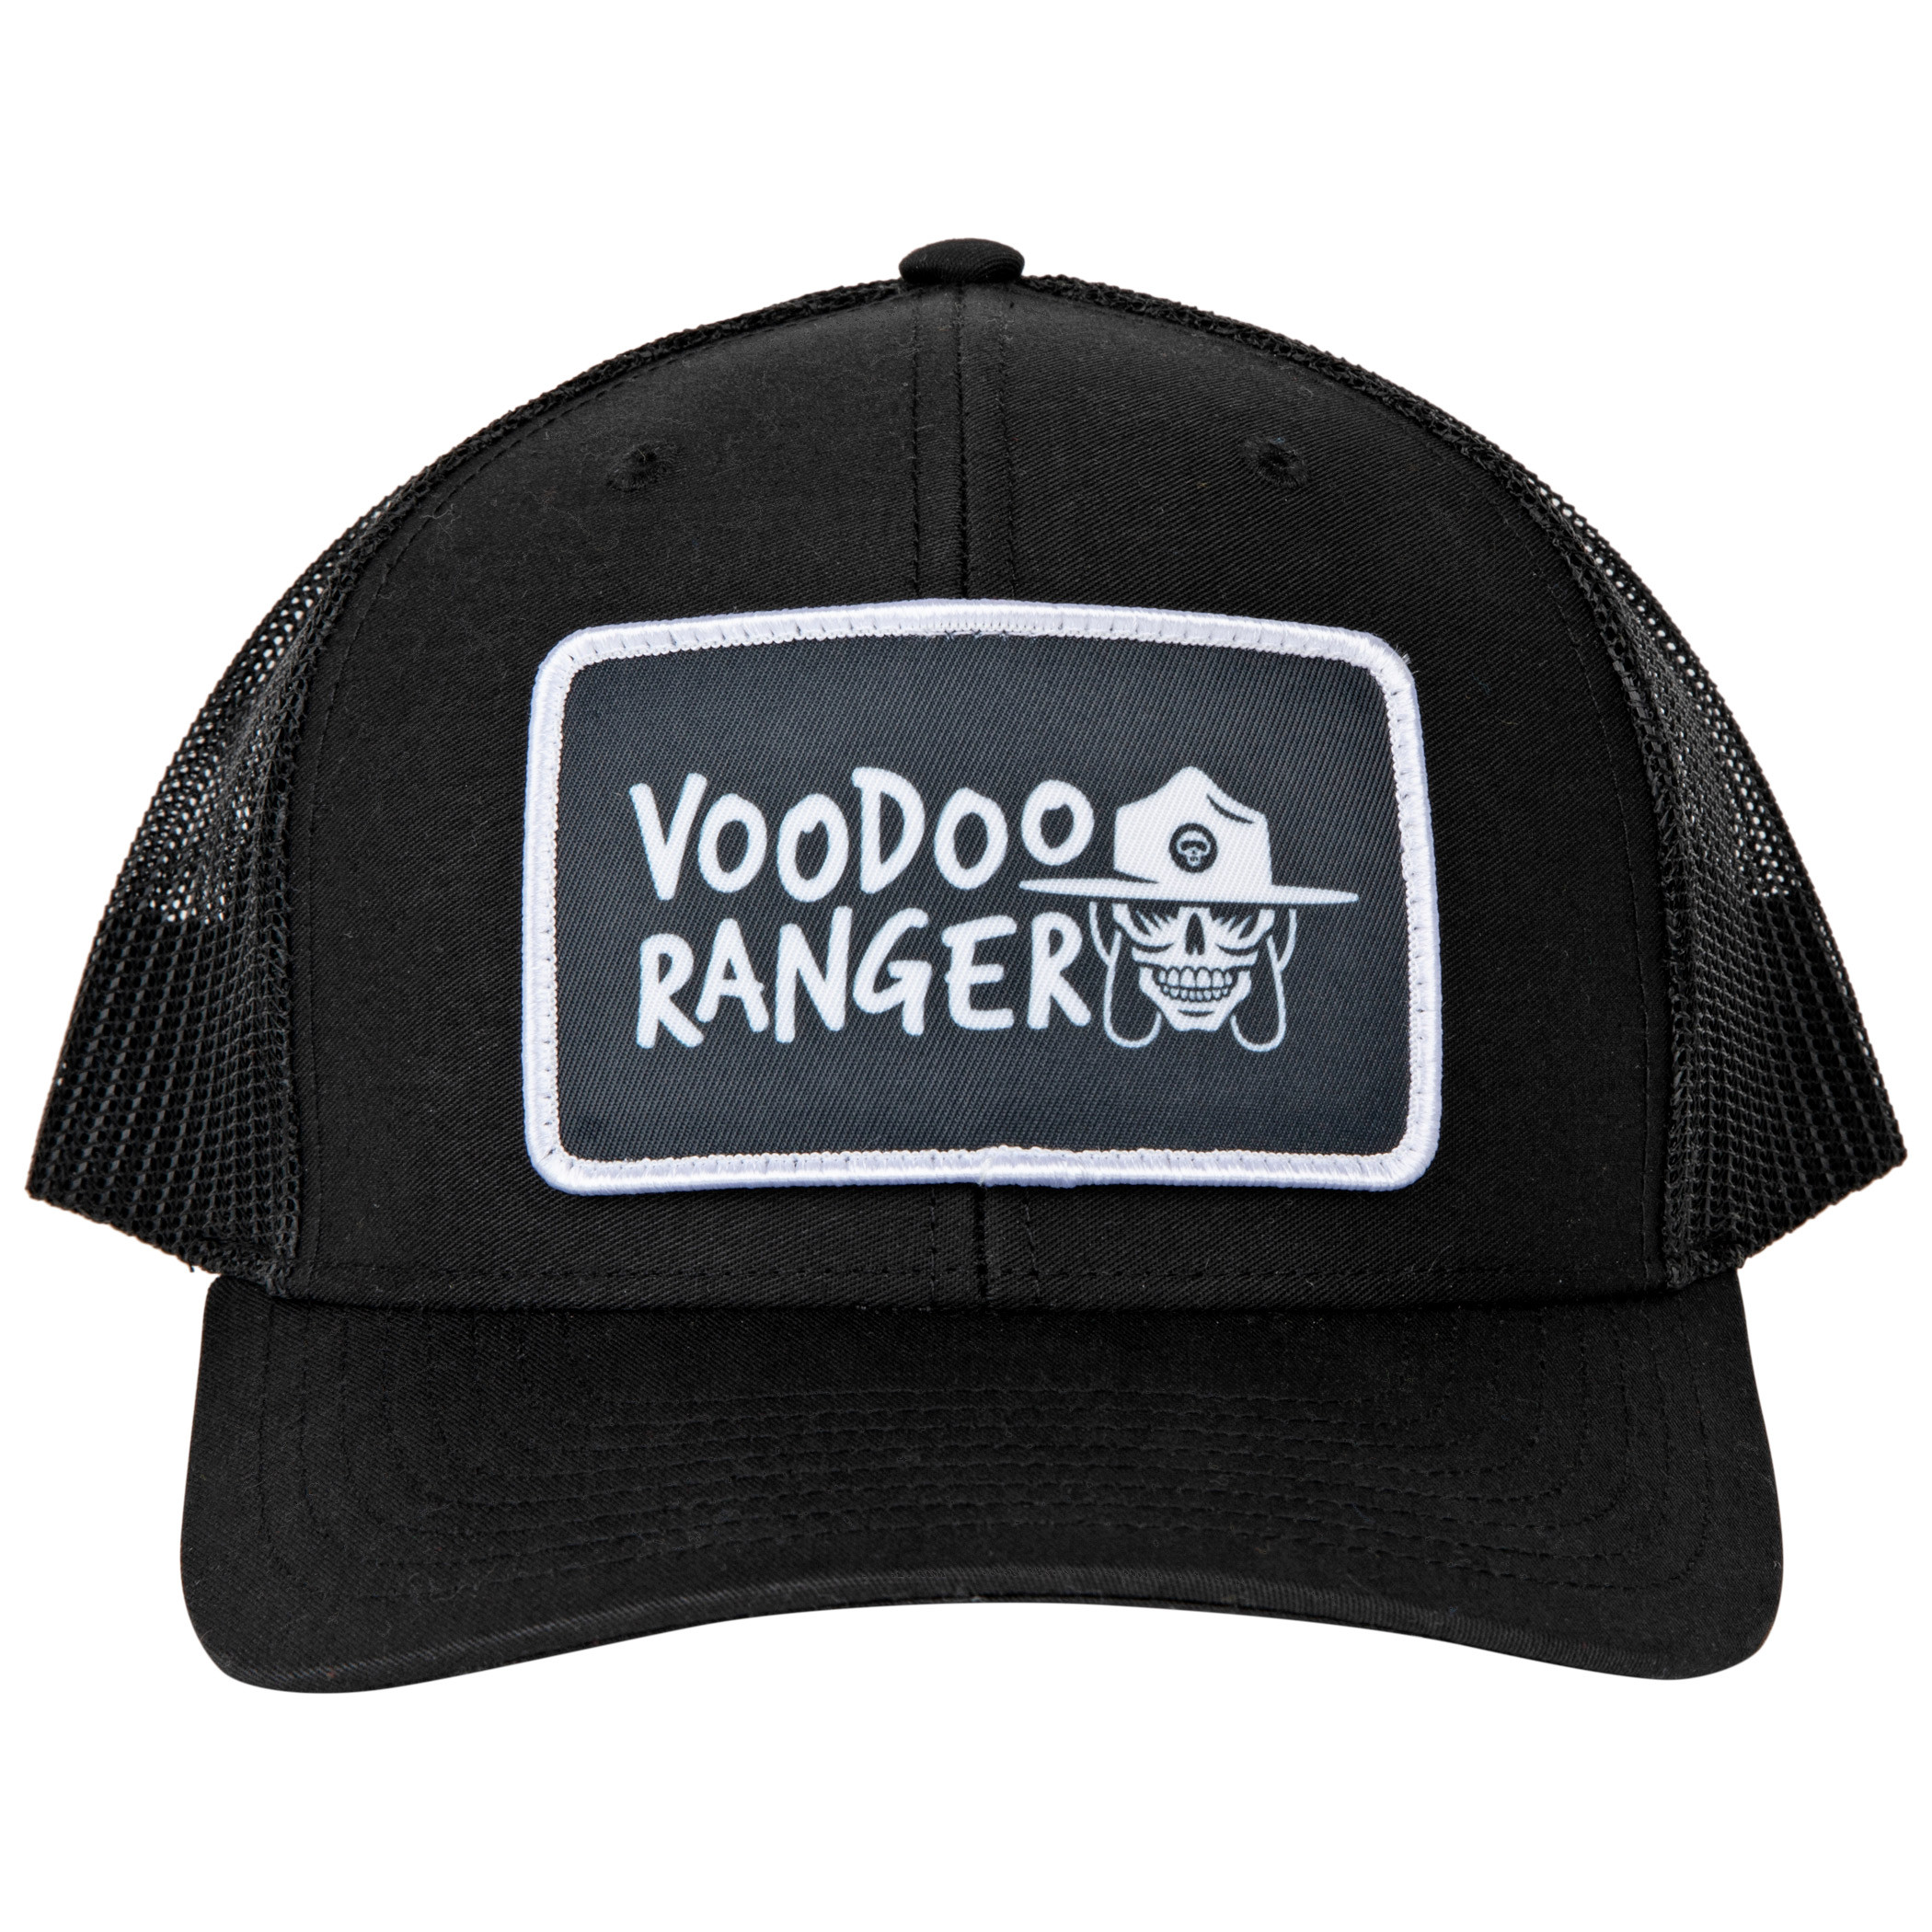 New Belgium Voodoo Ranger Pre-Curved Snapback